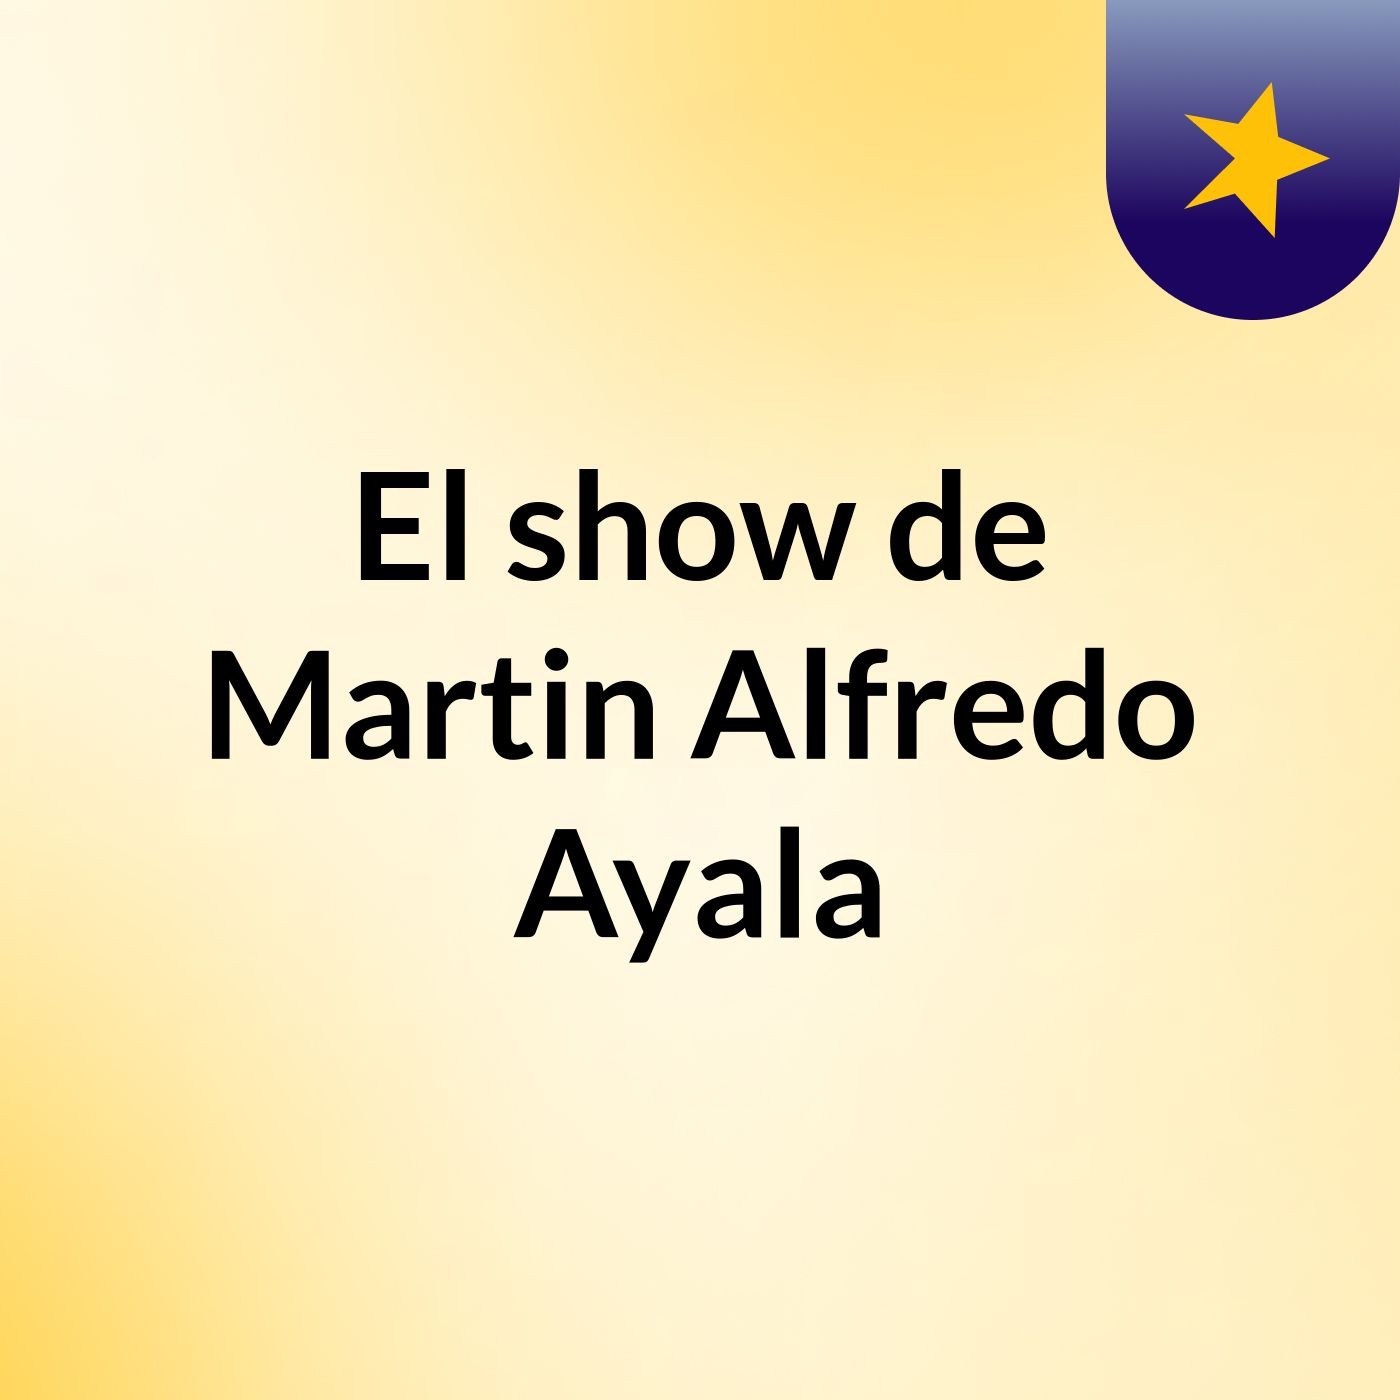 El show de Martin Alfredo Ayala